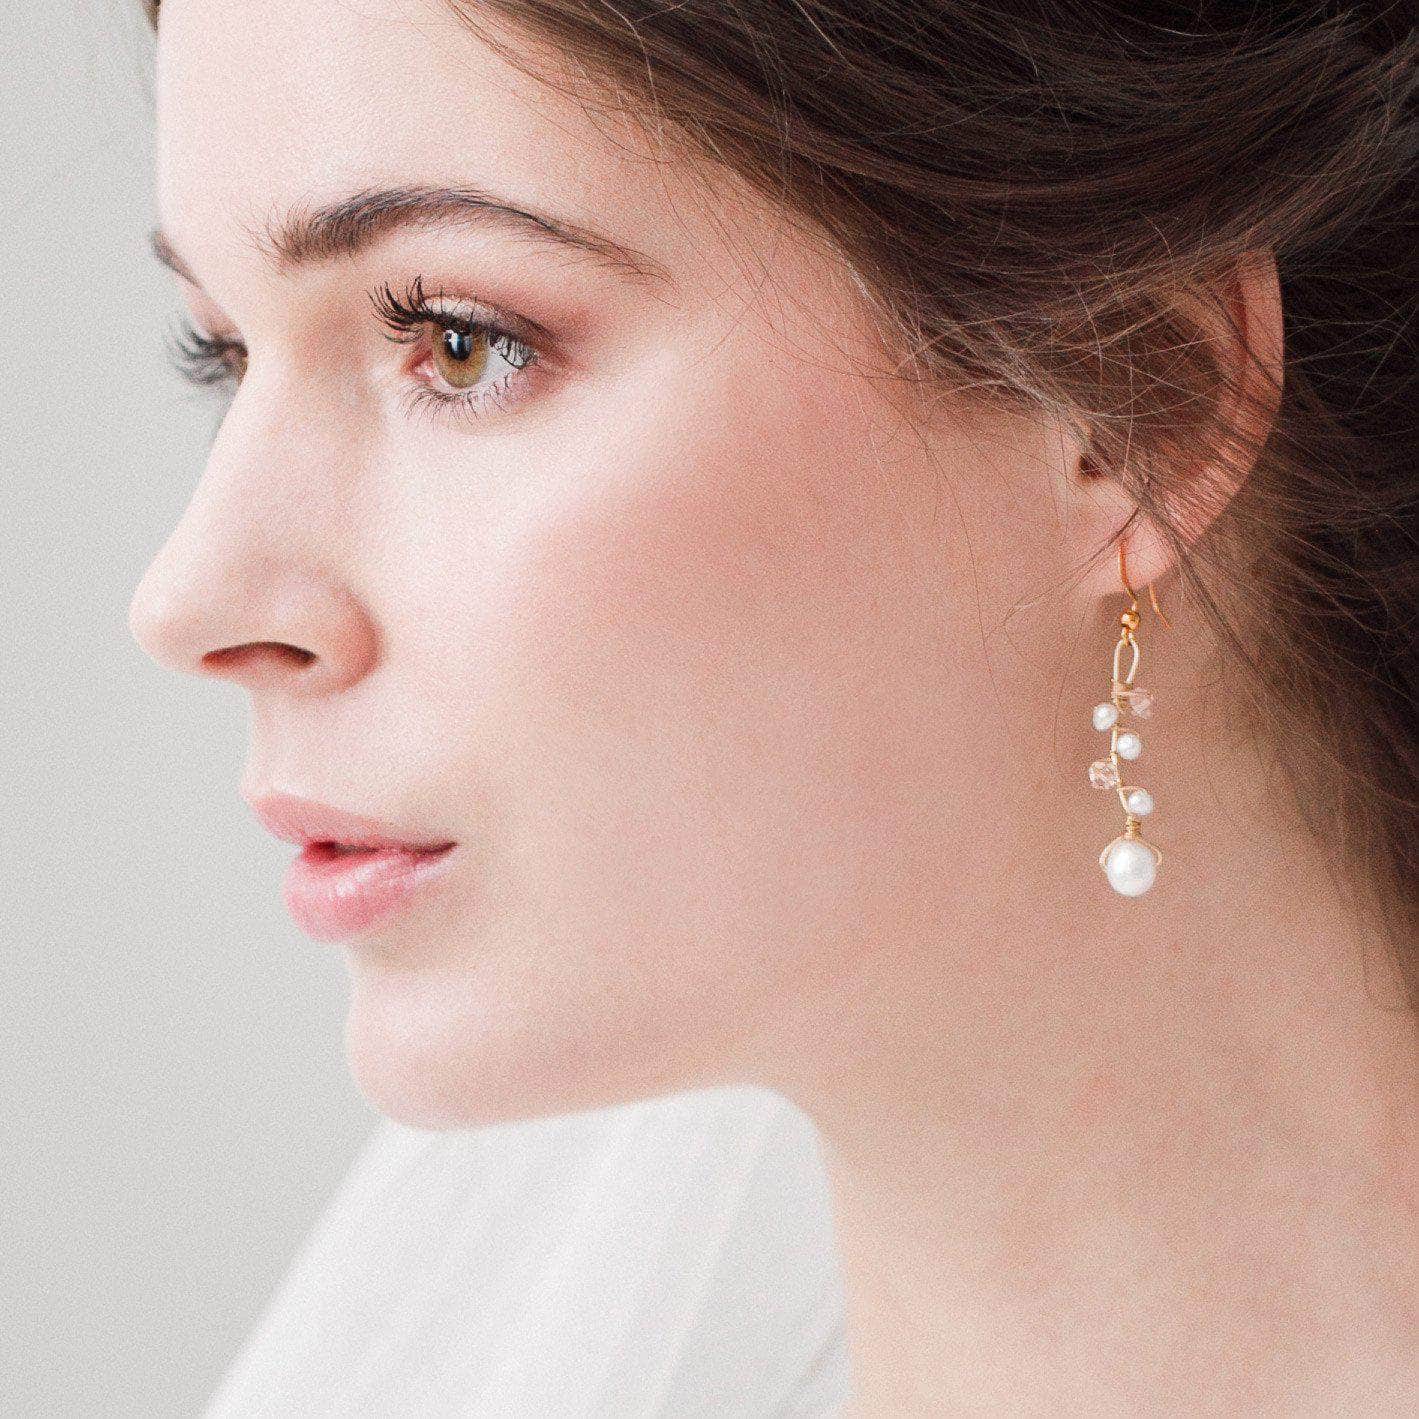 Wedding Earring Silverblush Silver wedding earrings of blush crystal and freshwater pearl - 'Addie'